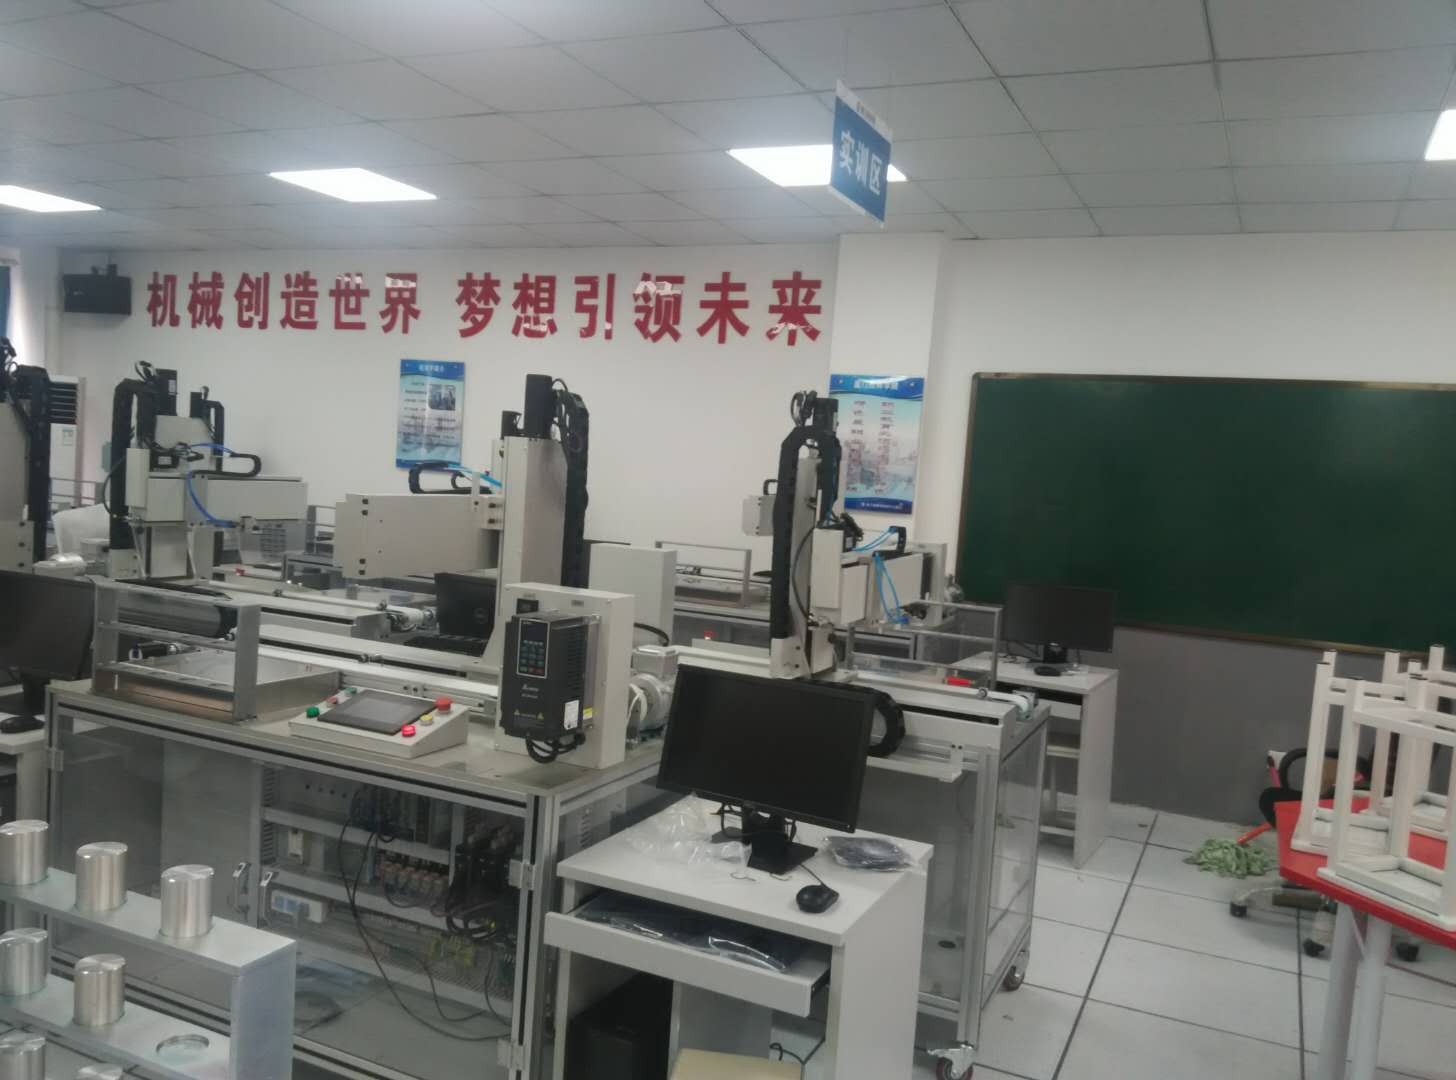 Robot training room